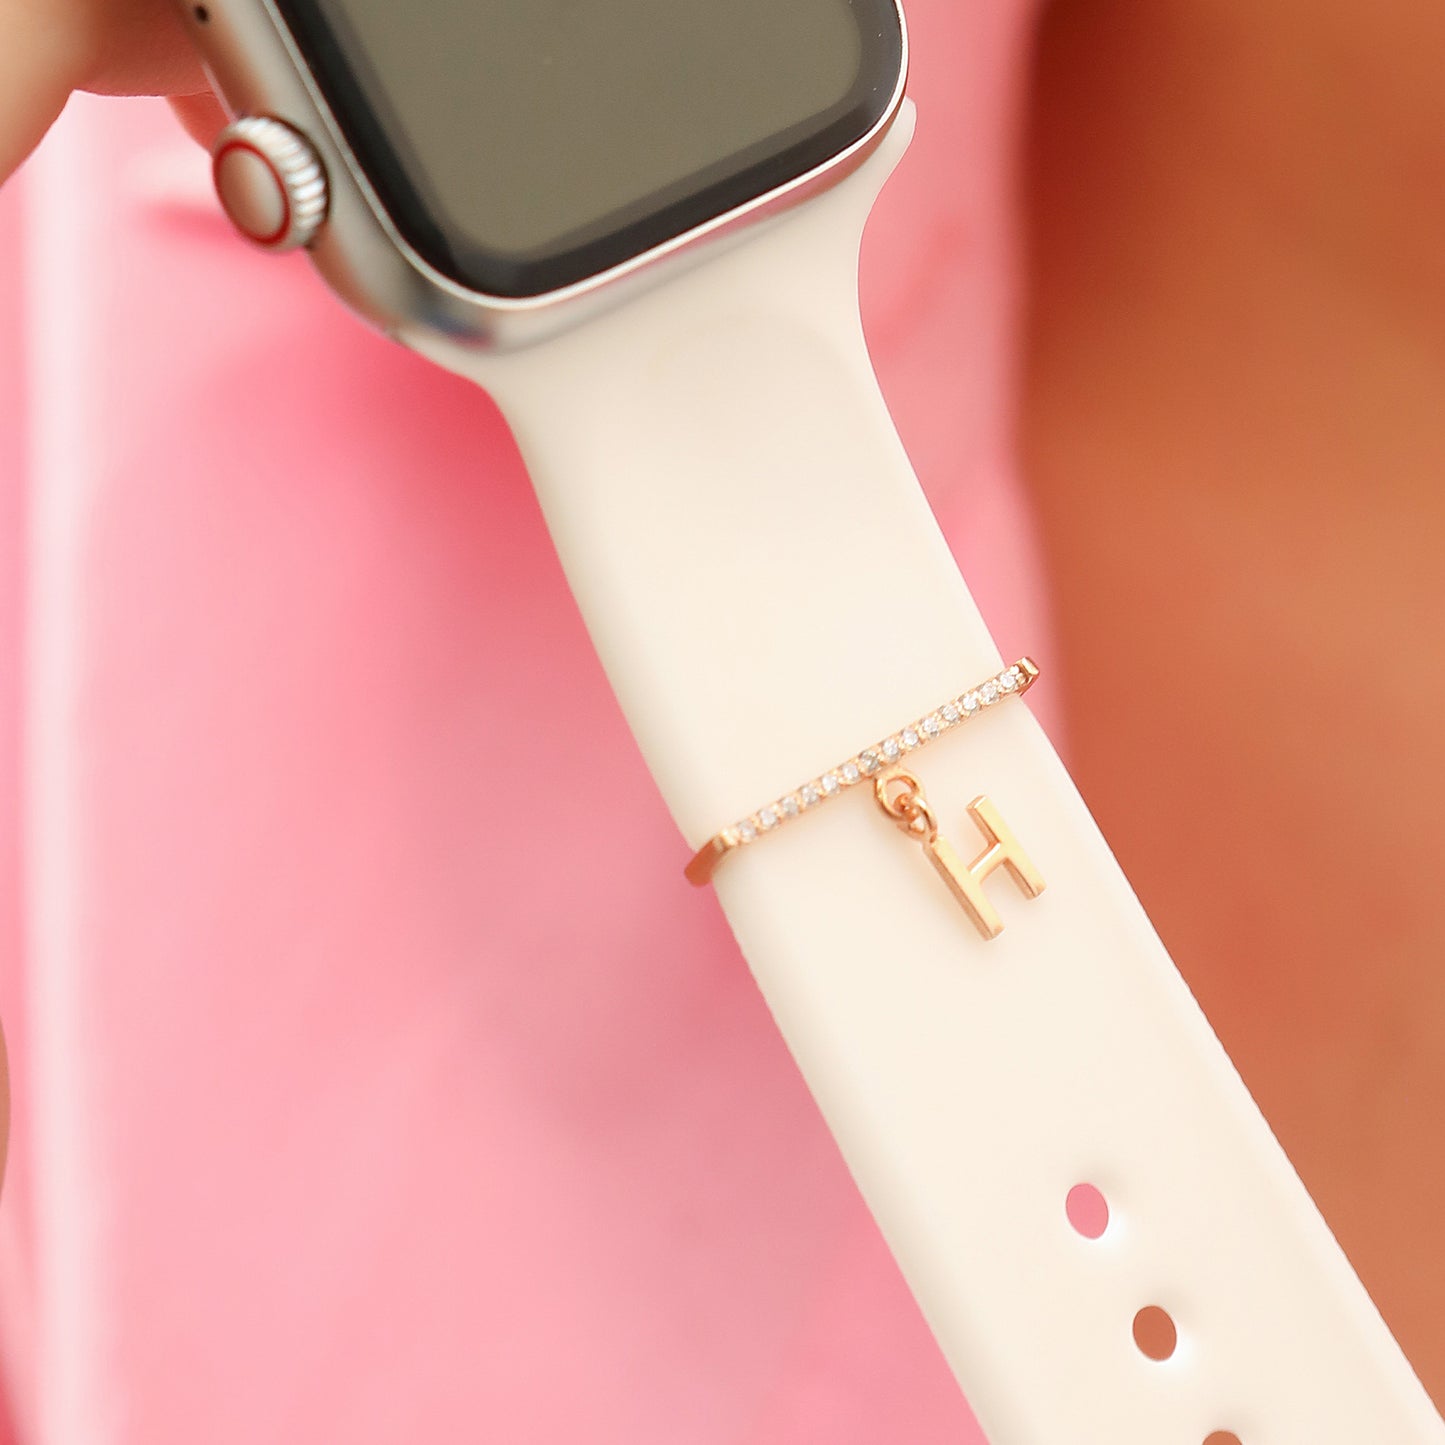 Apple Watch Initial Manschette.